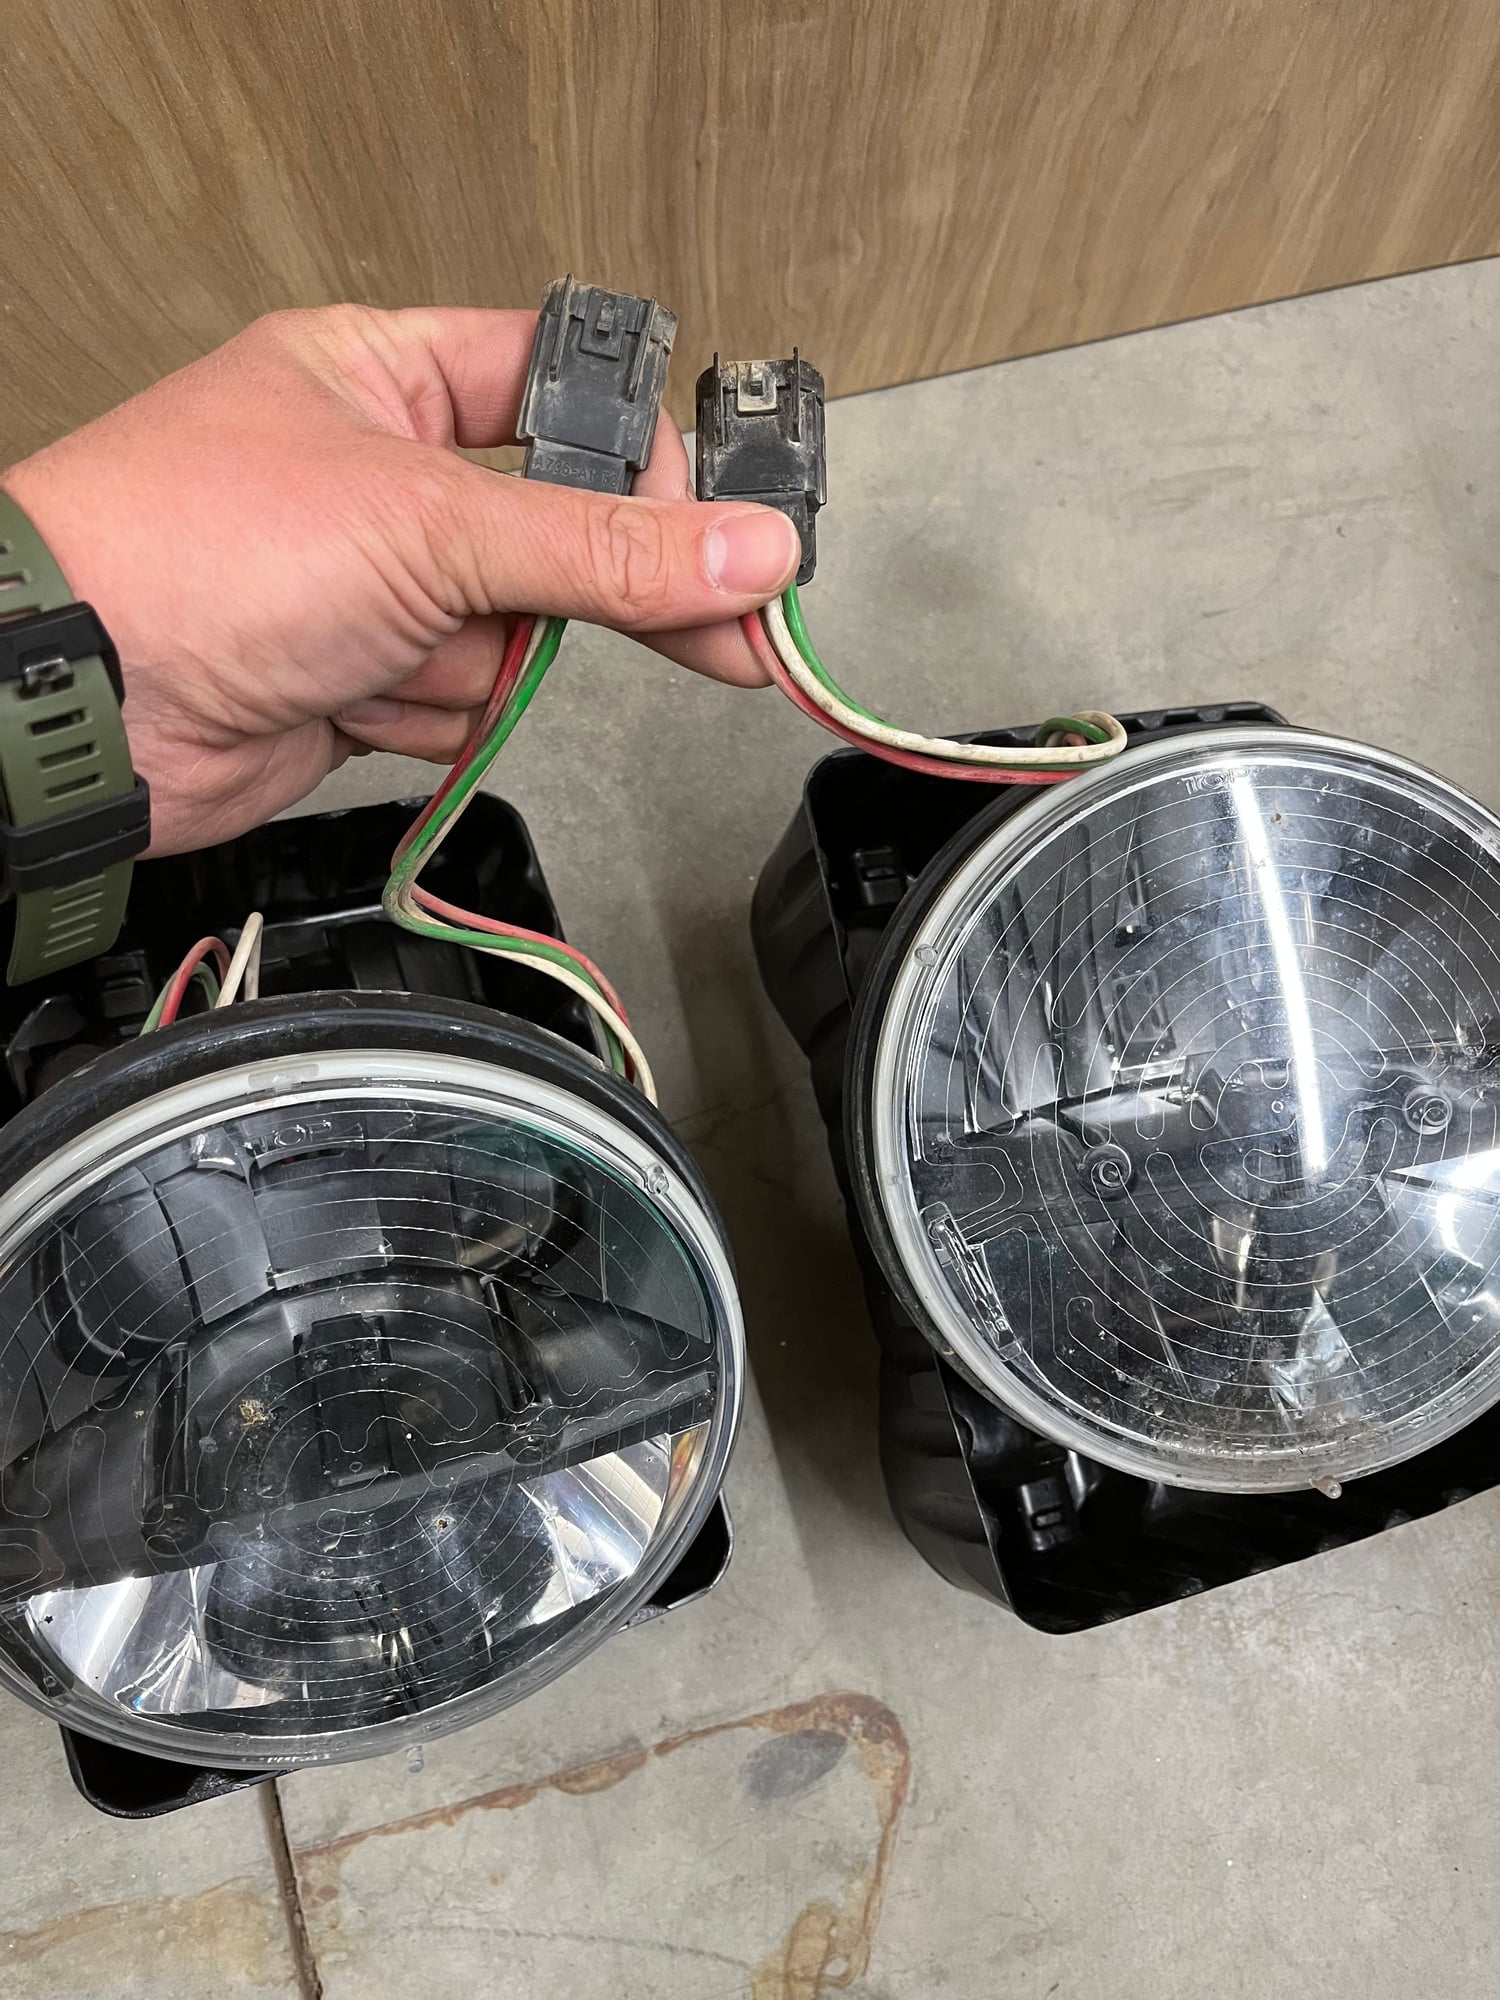 Lights - Truck Lite Heated LED Headlights - Used - 2007 to 2017 Jeep Wrangler - Durango, CO 81301, United States